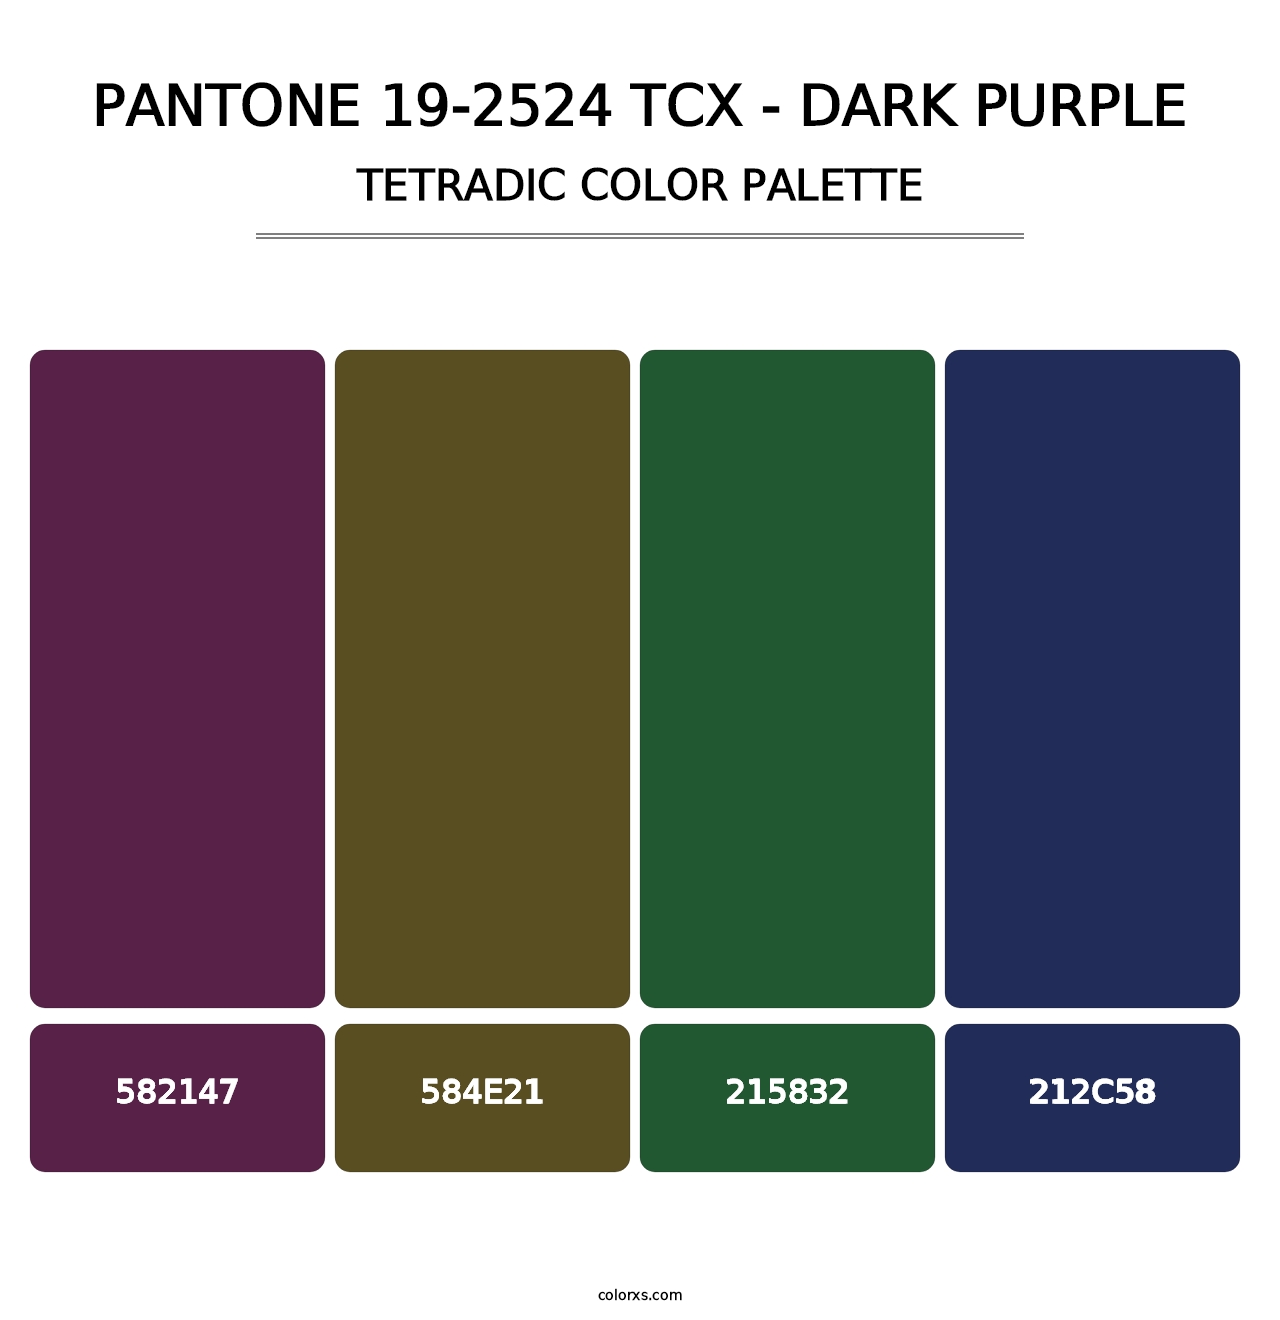 PANTONE 19-2524 TCX - Dark Purple - Tetradic Color Palette